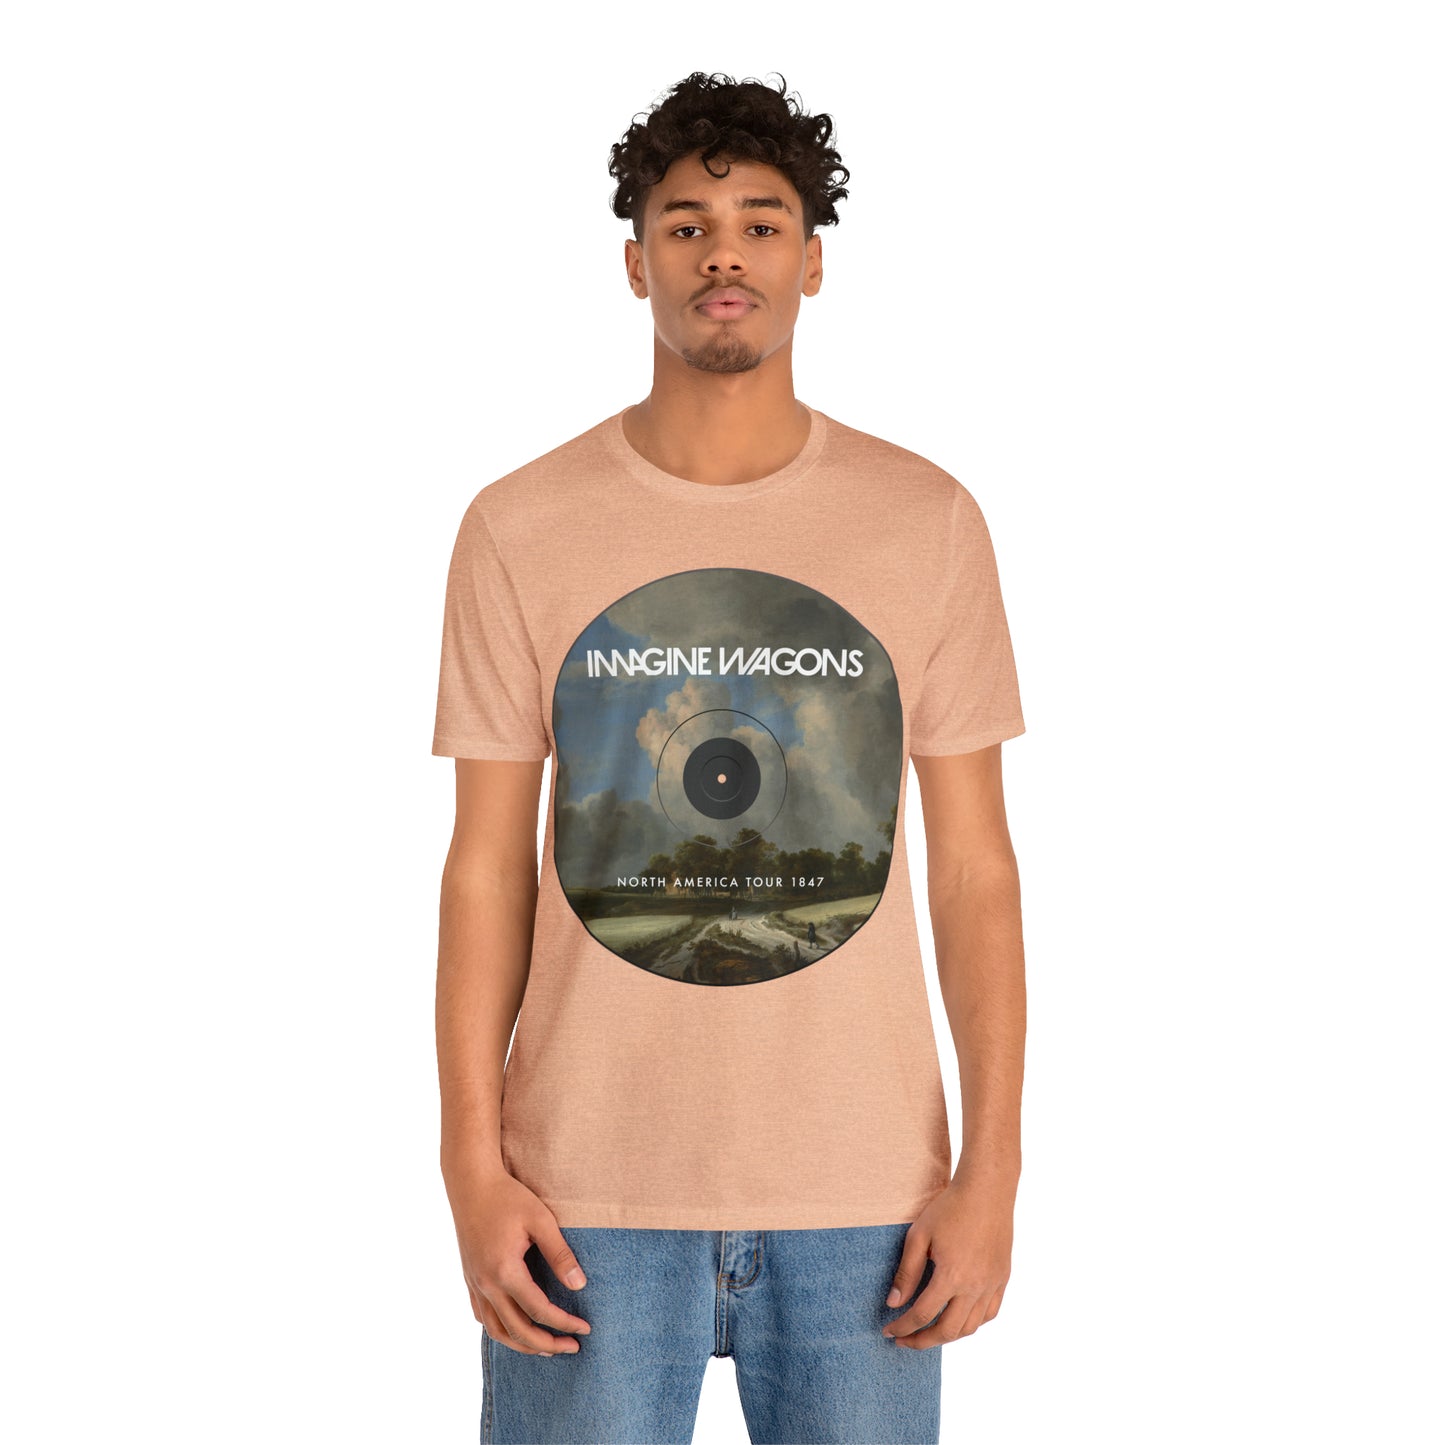 Imagine Wagons - 1847 Mormon Pioneer Trek Shirt